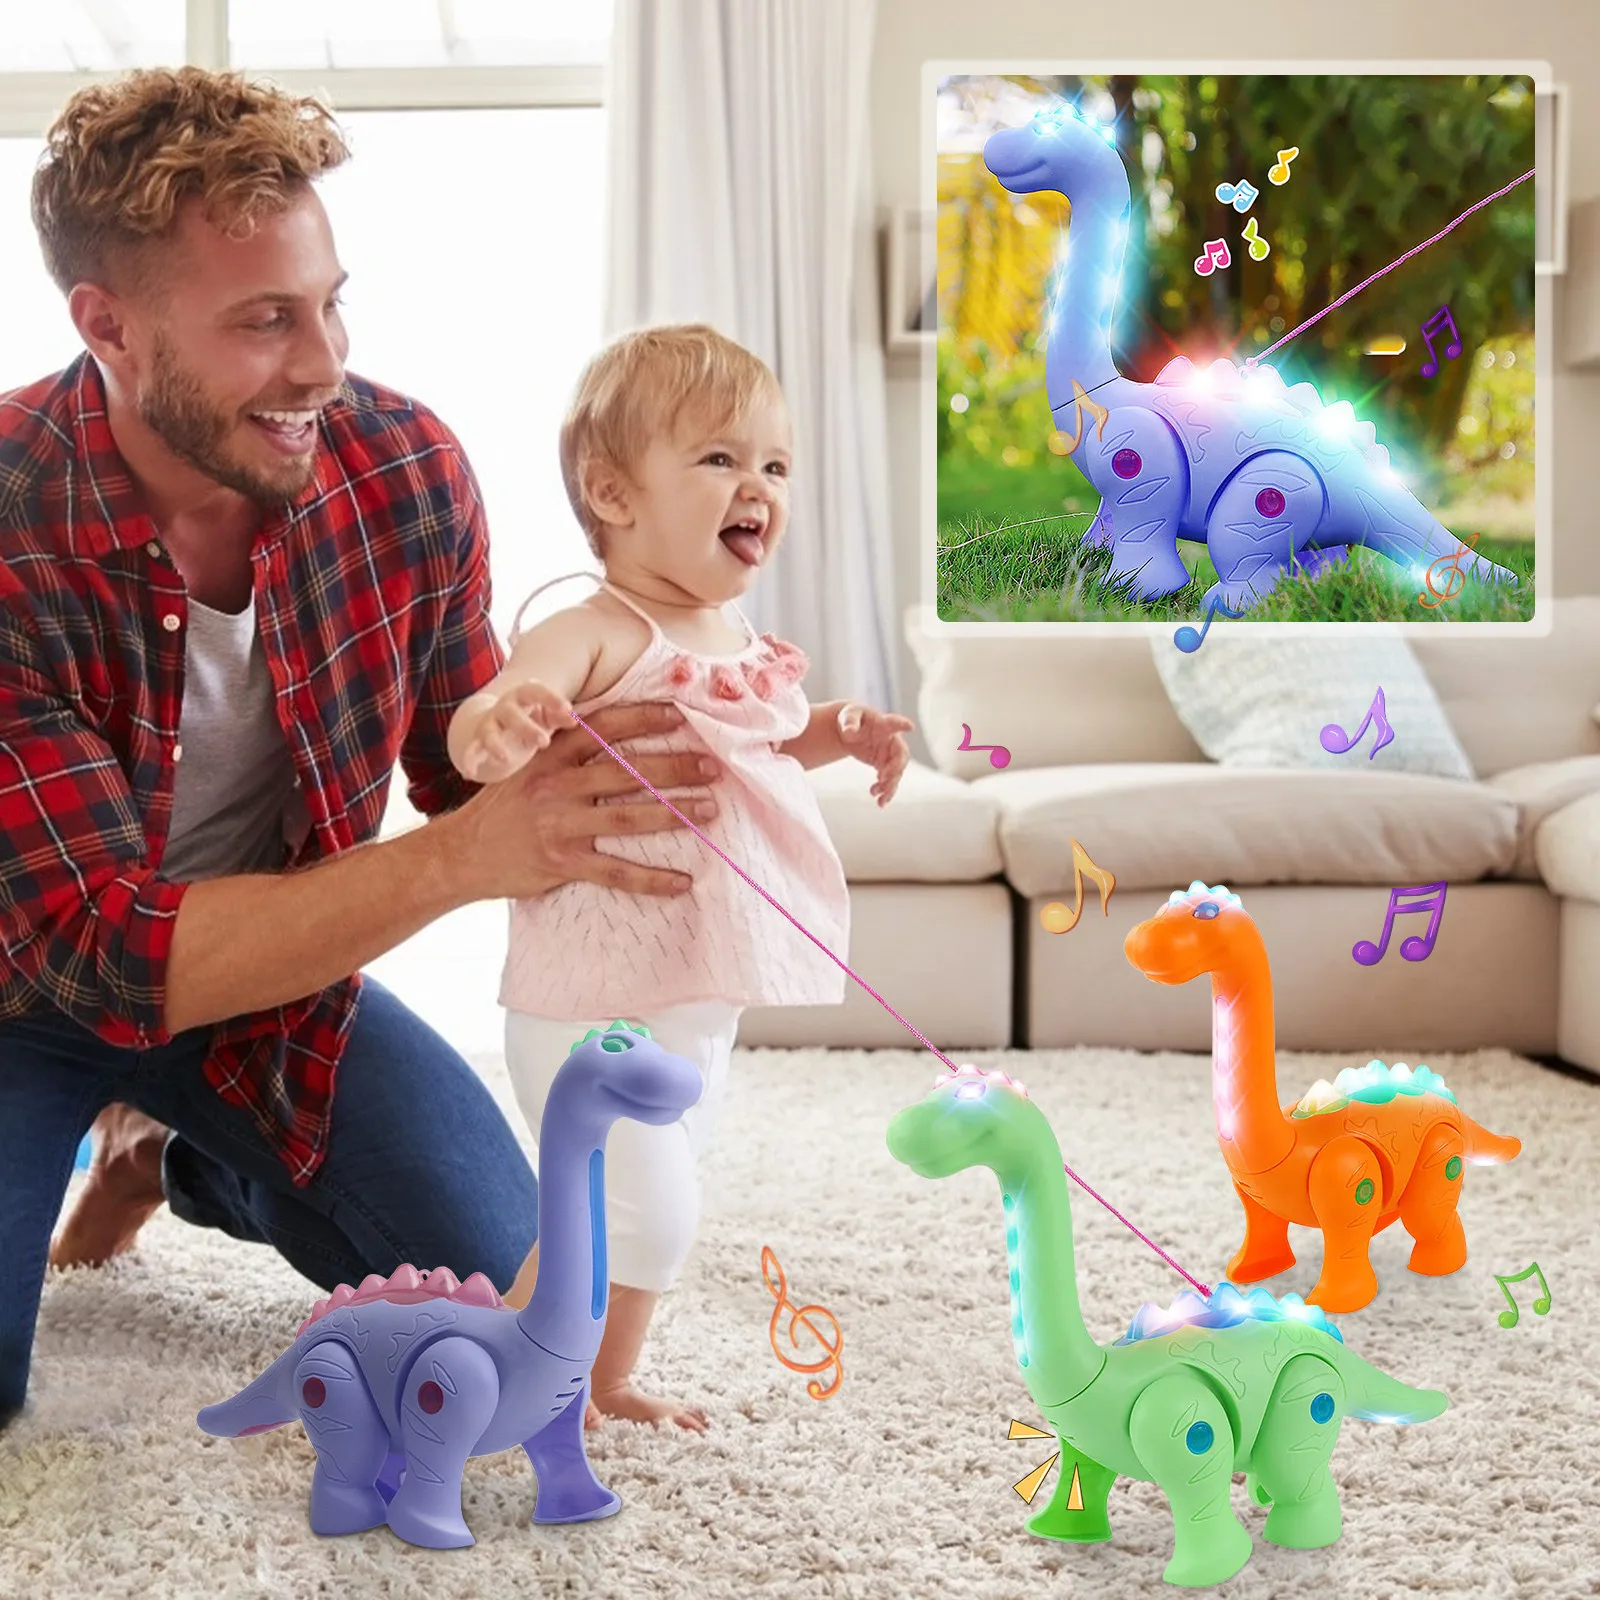 

Leash Dinosaur Toy Simulation Animal Glowing Musical Toy Model Children's Educational Electronic Cartoon Dinosaur Pet Toy